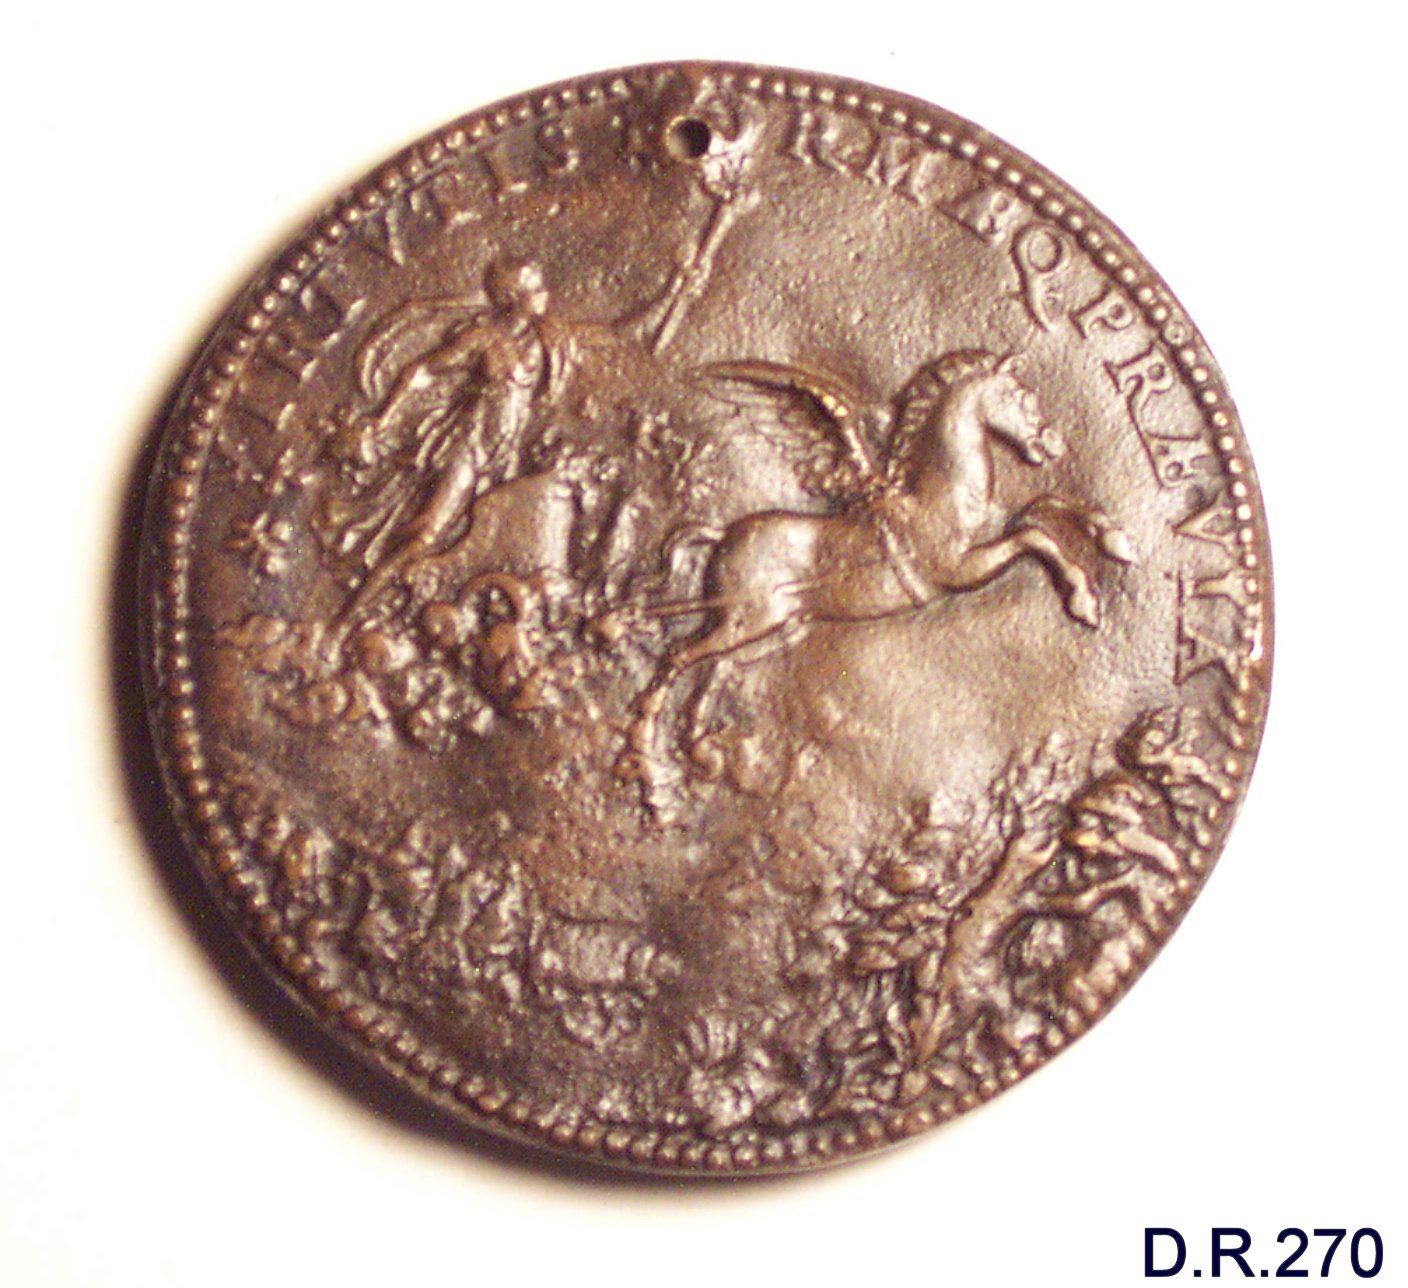 medaglia di Pastorini Pastorino, Nizzola Iacopo detto Trezzo Iacopo (sec. XVI)